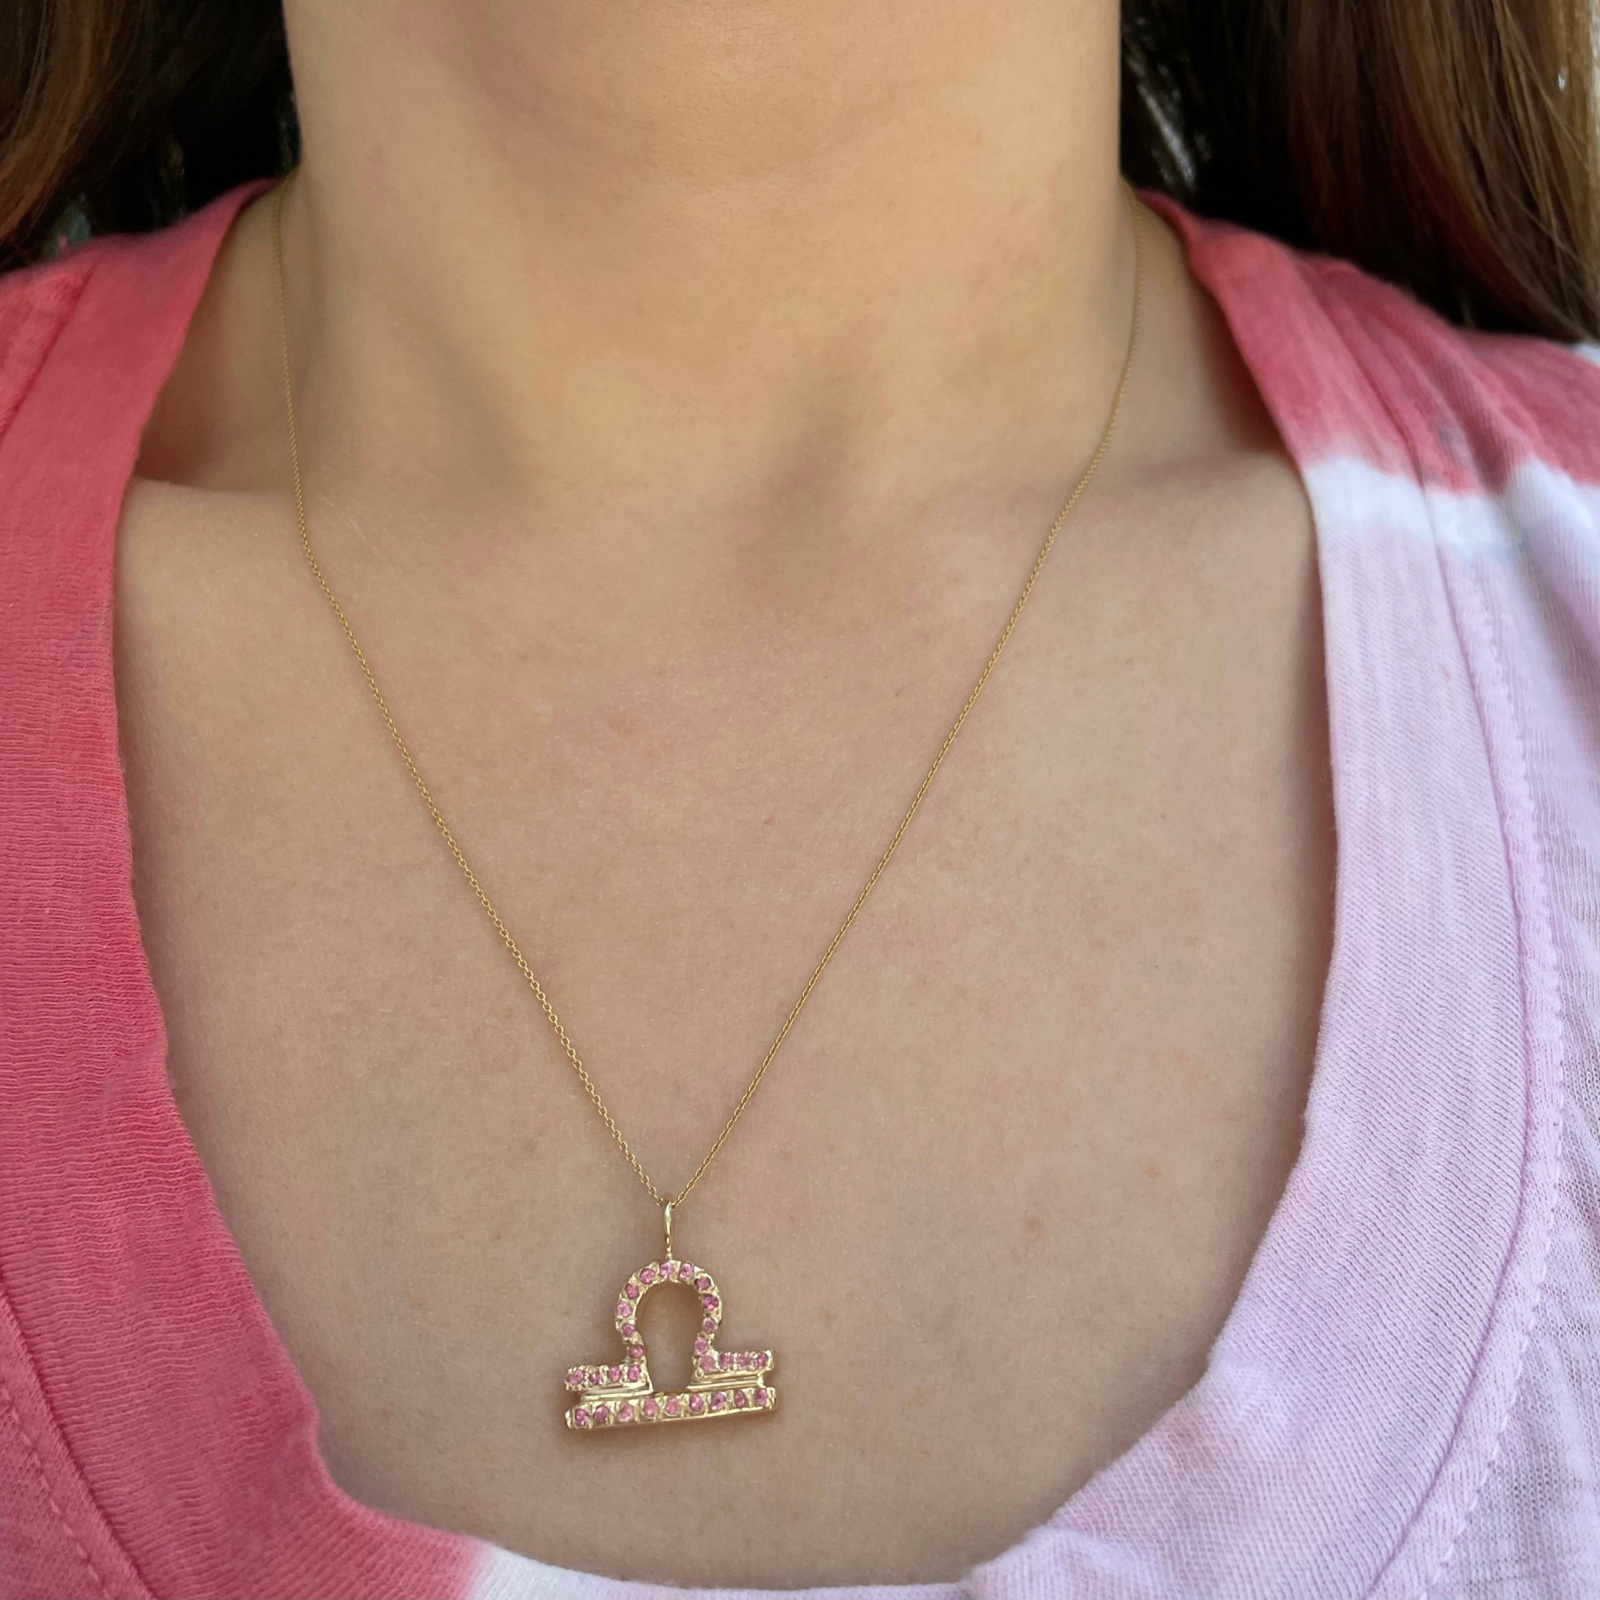 Libra zodiac sign charm pendant necklace